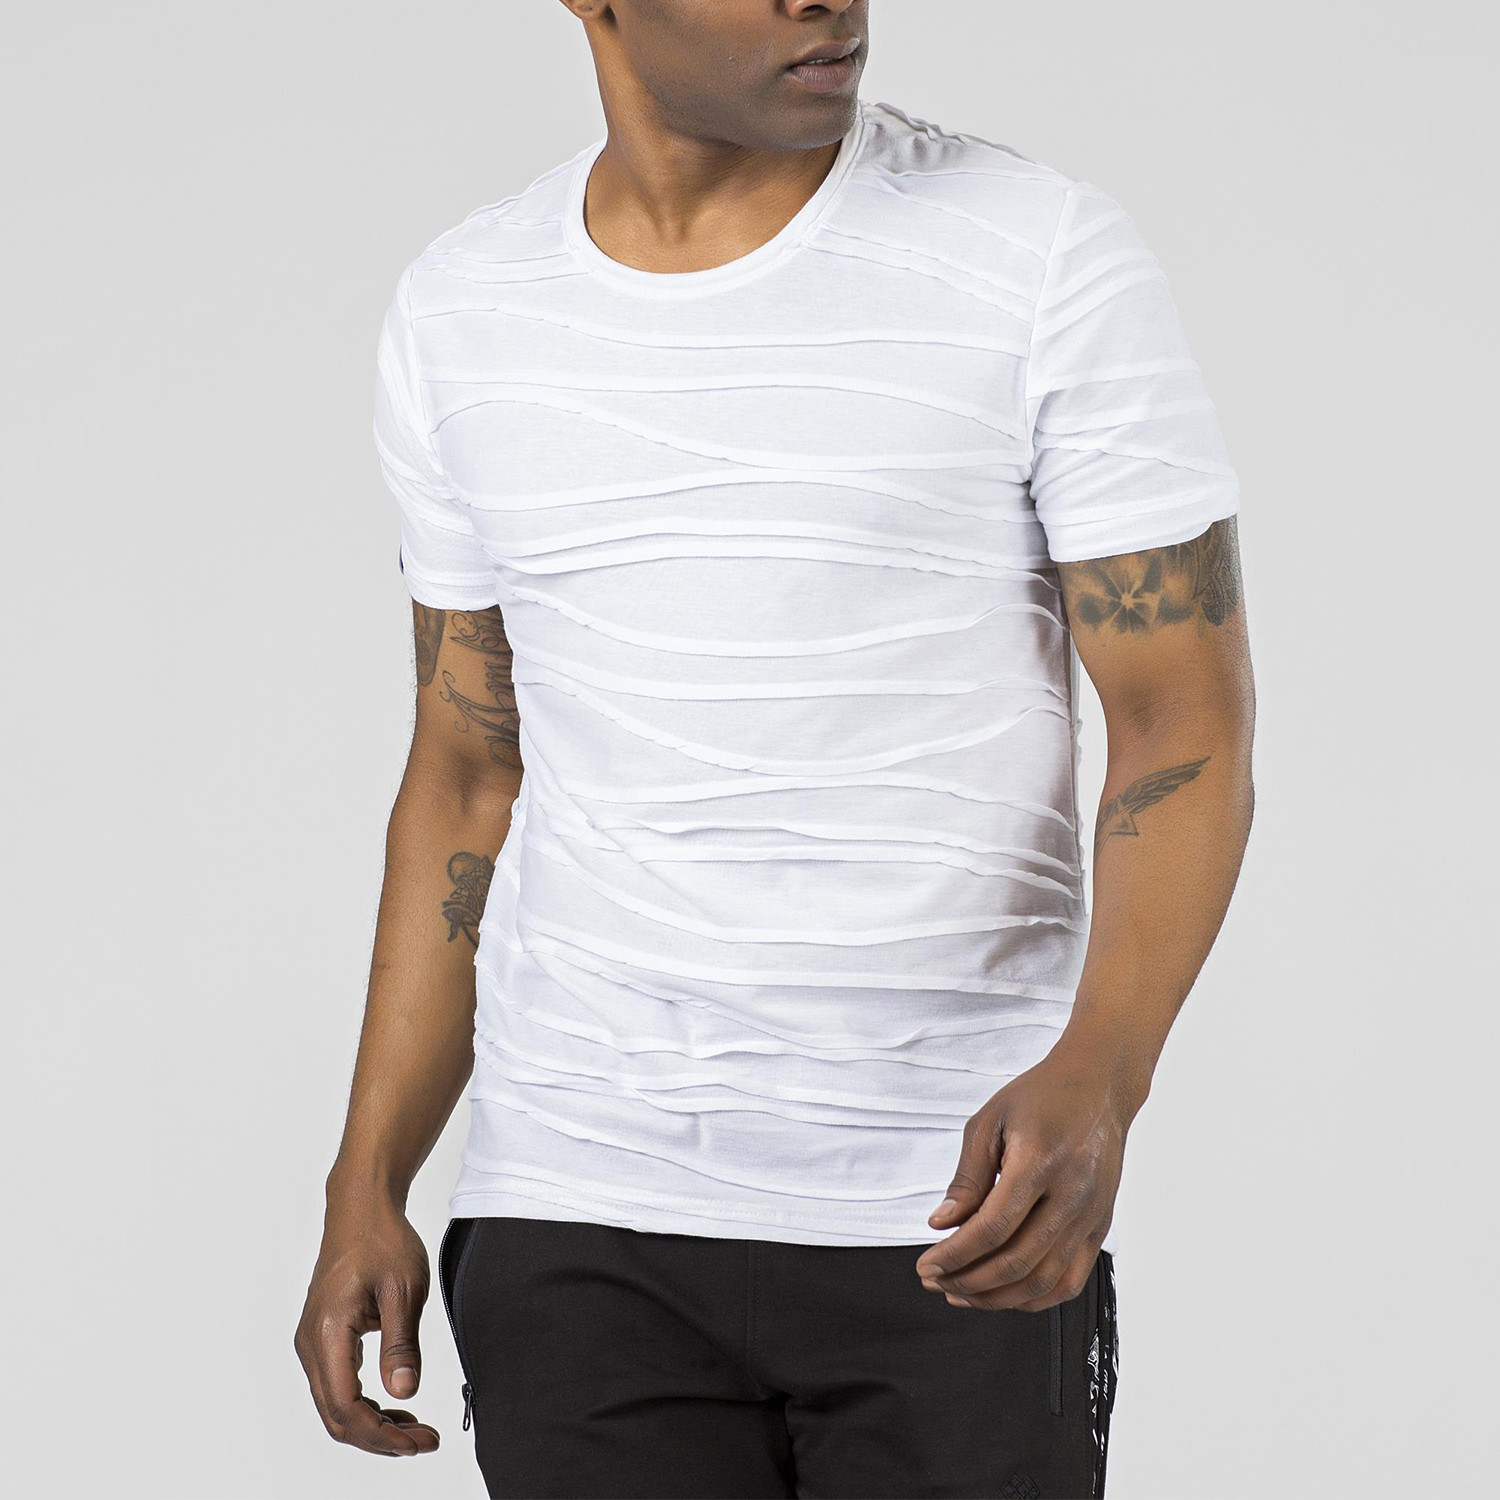 Wave Textured T-Shirt // White (S) - YASEMEN DIŞ TİCARET LTD. ŞTİ ...